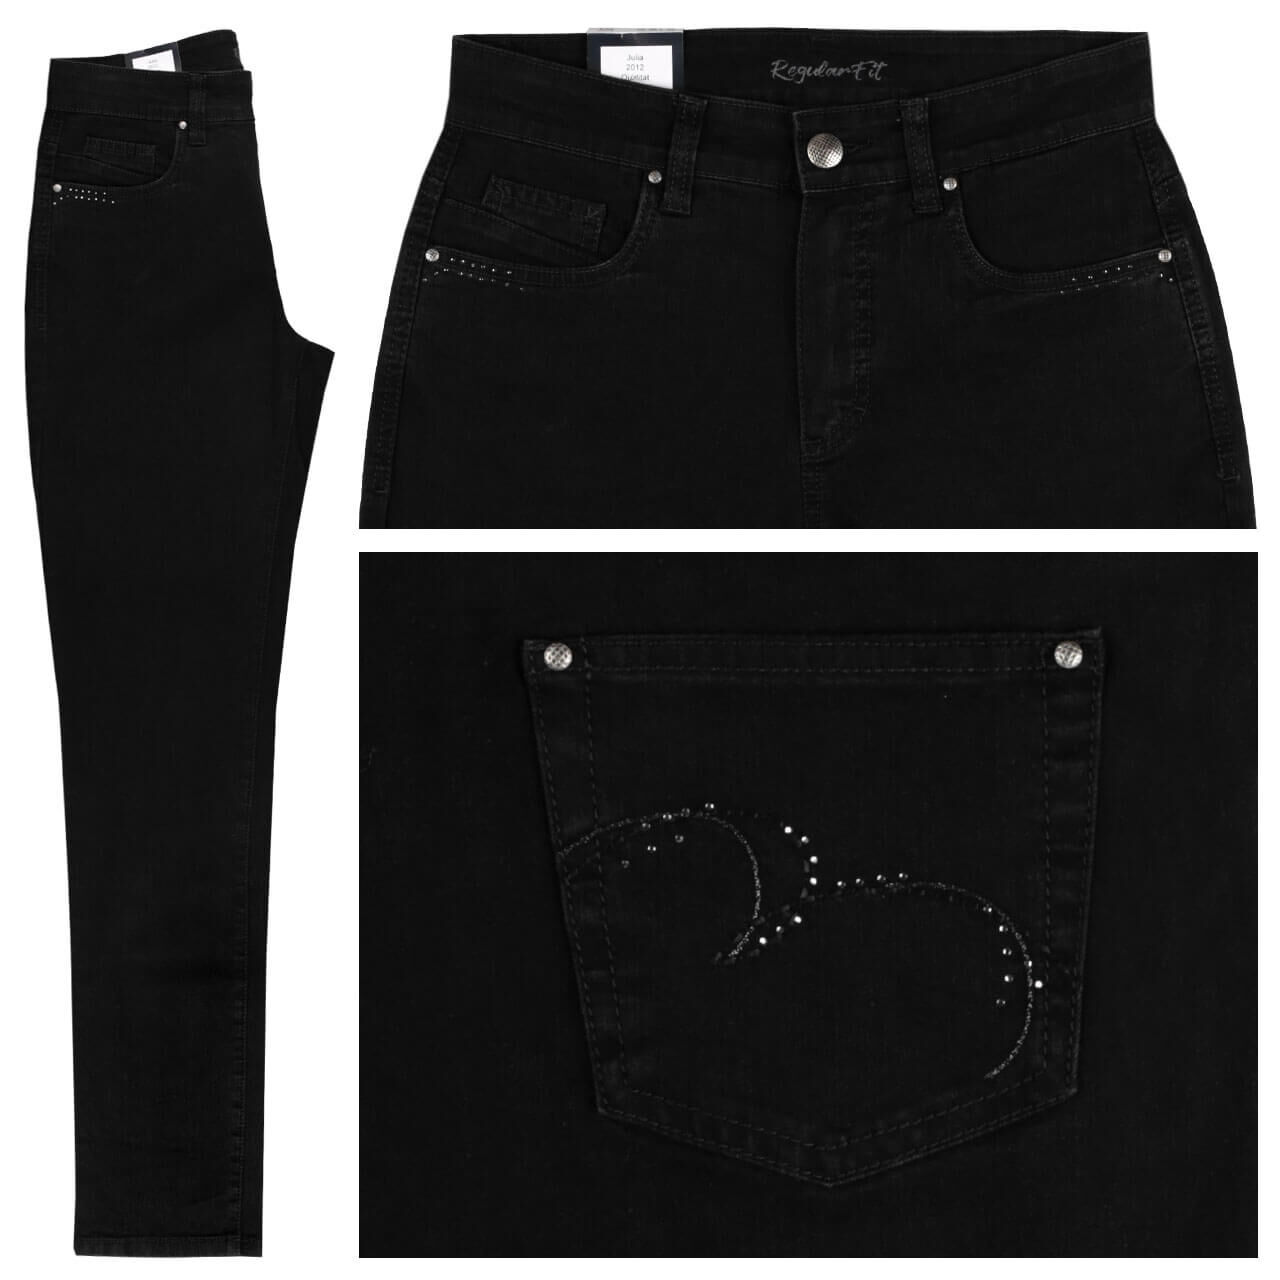 anna montana julia jeans black 36/32 schwarz donna